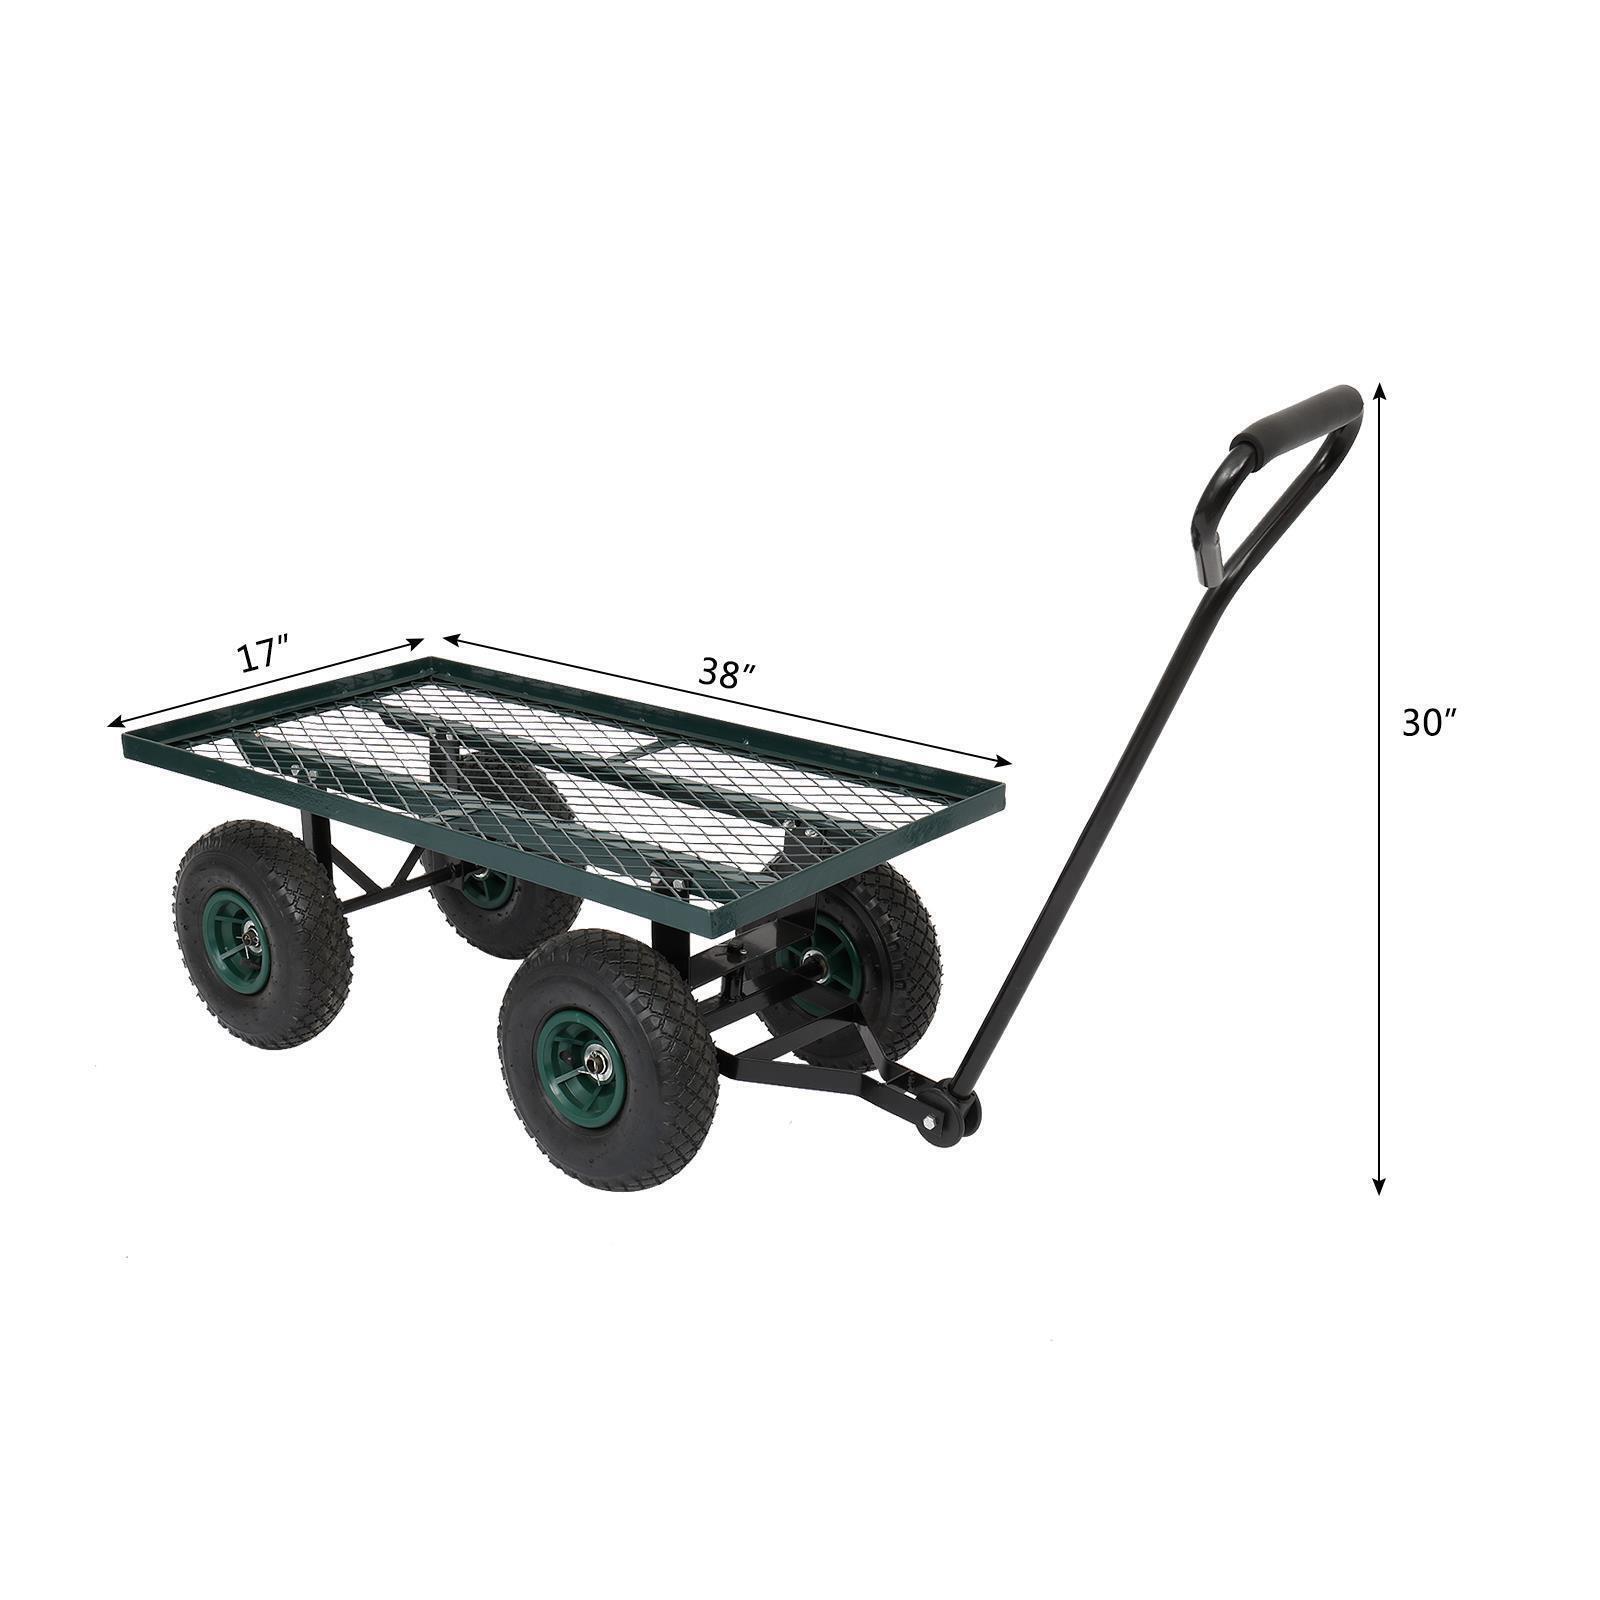 thinkstar Garden Carts Yard Dump Wagon Wheel Cart Hand Tools Cart Outdoor Heavy Duty